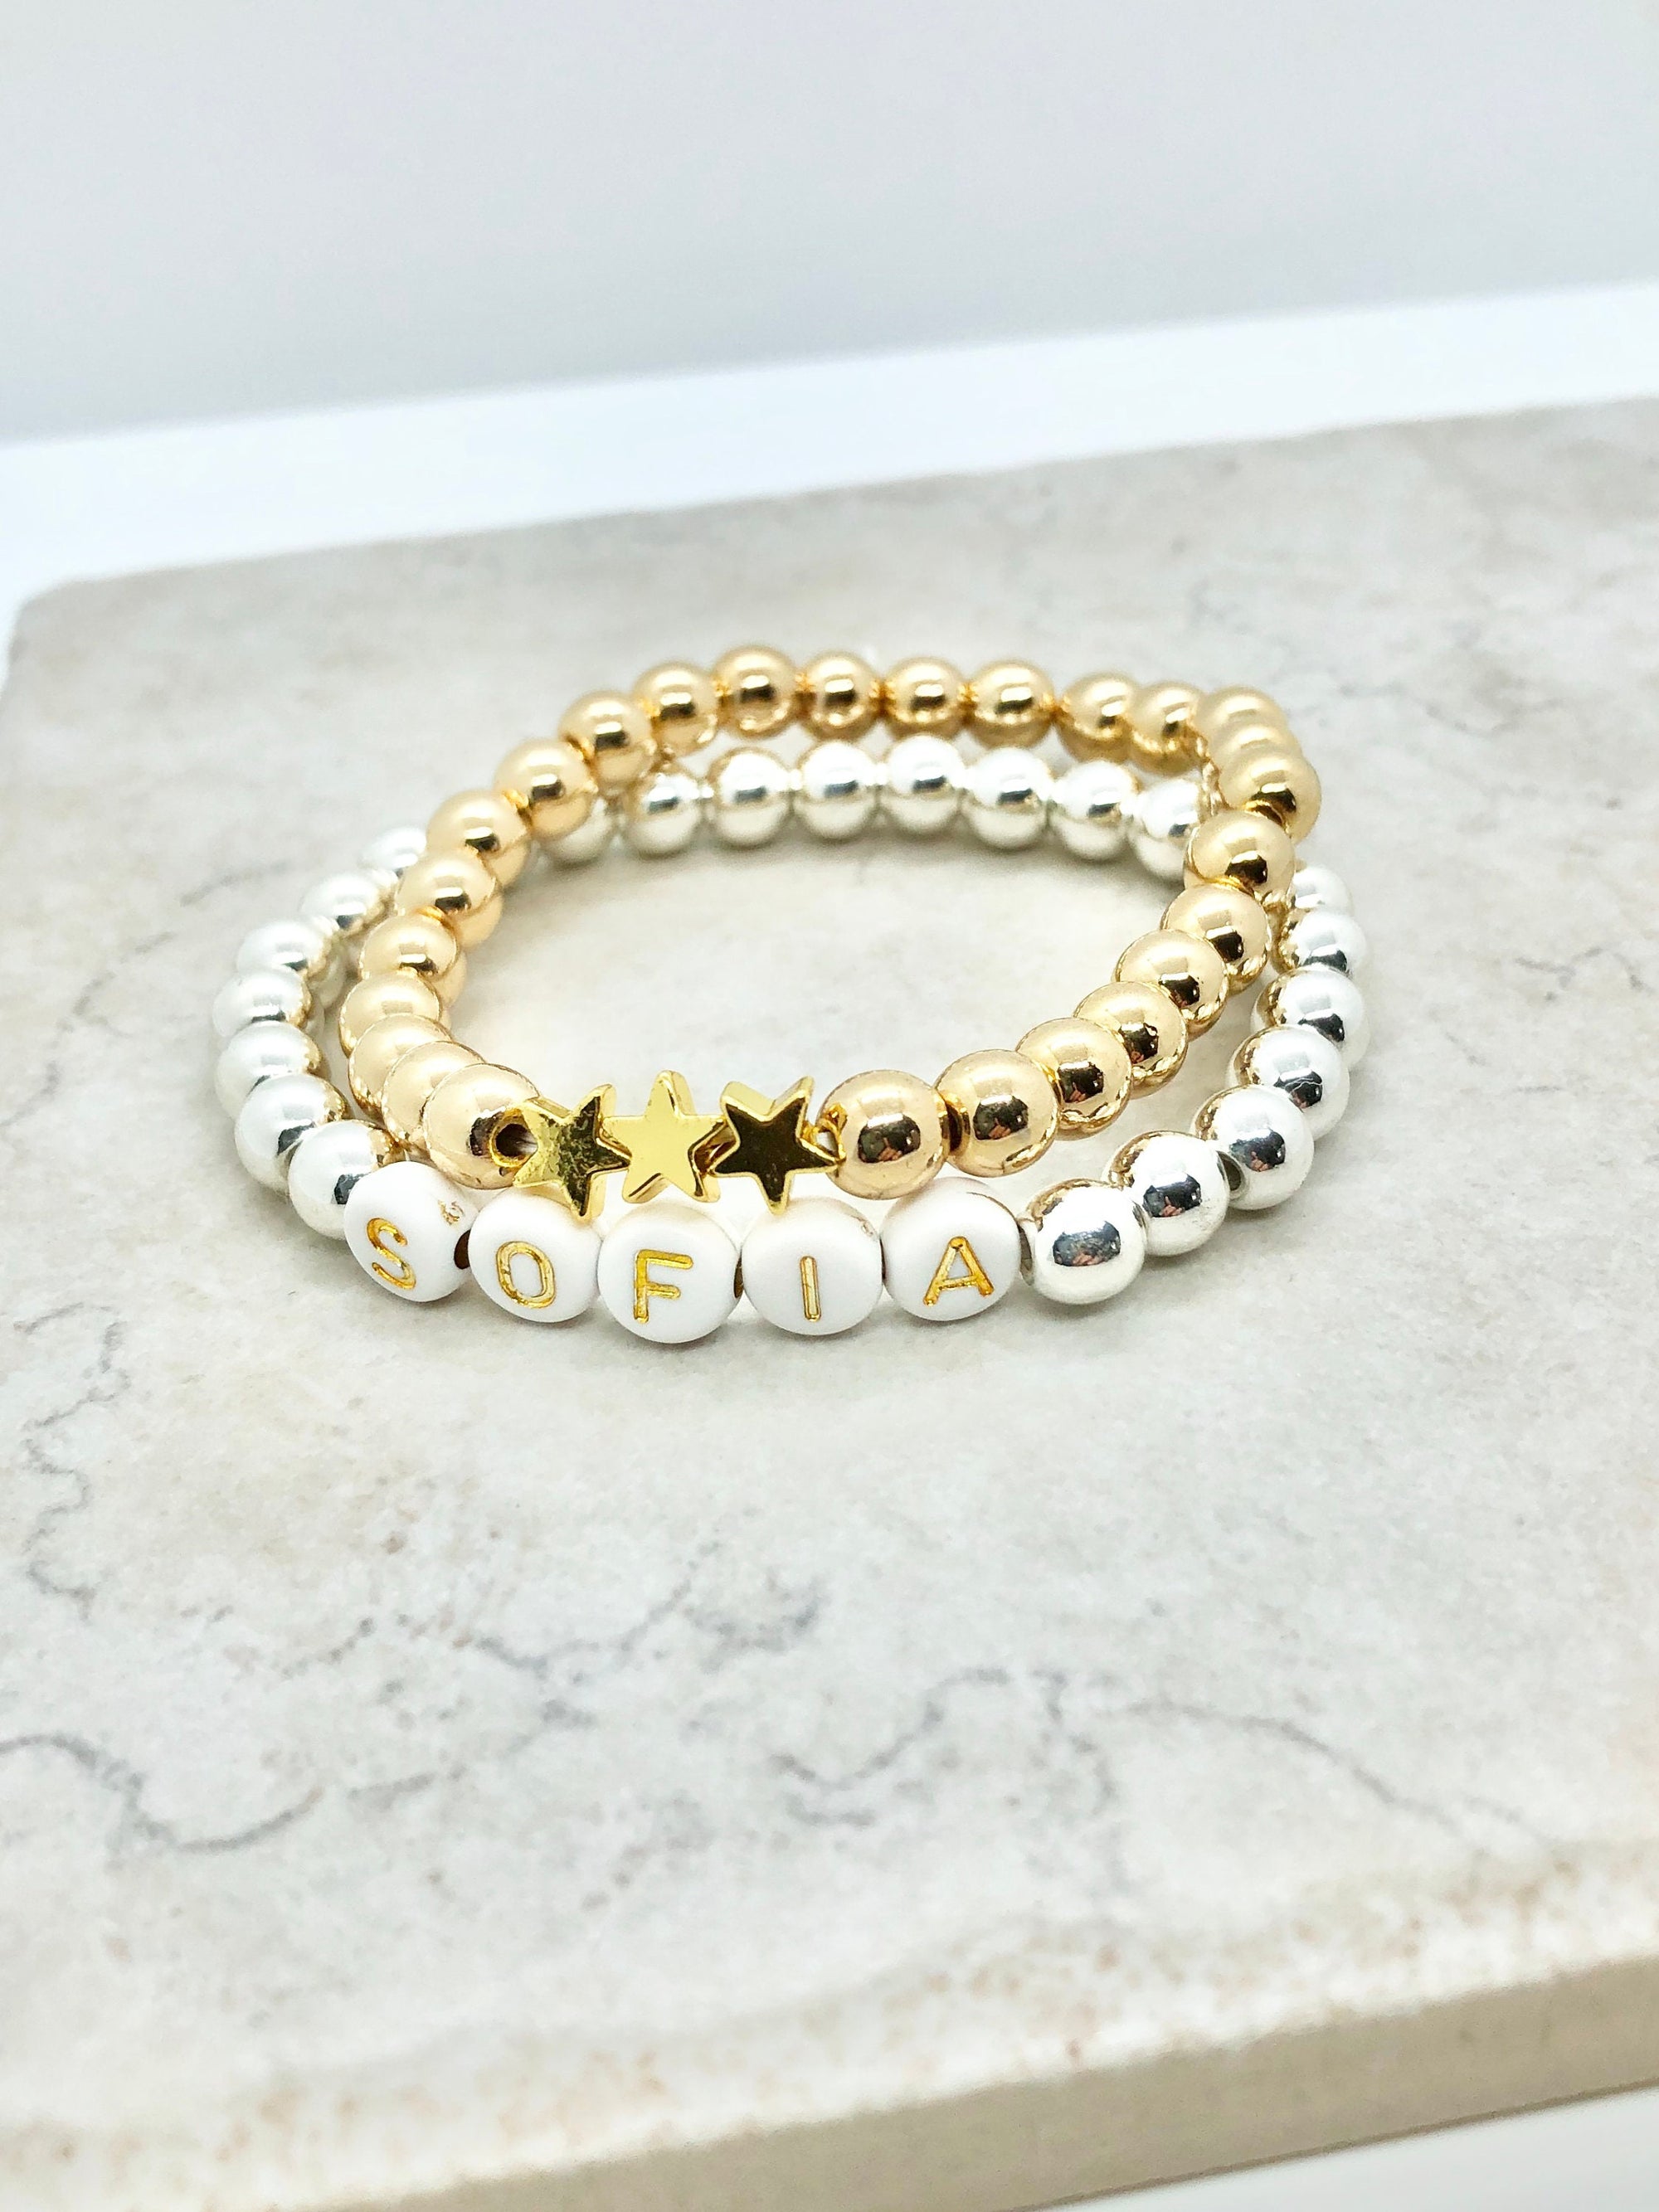 Boys Name Bracelet - Wood Beads - White/Gold Name Letters